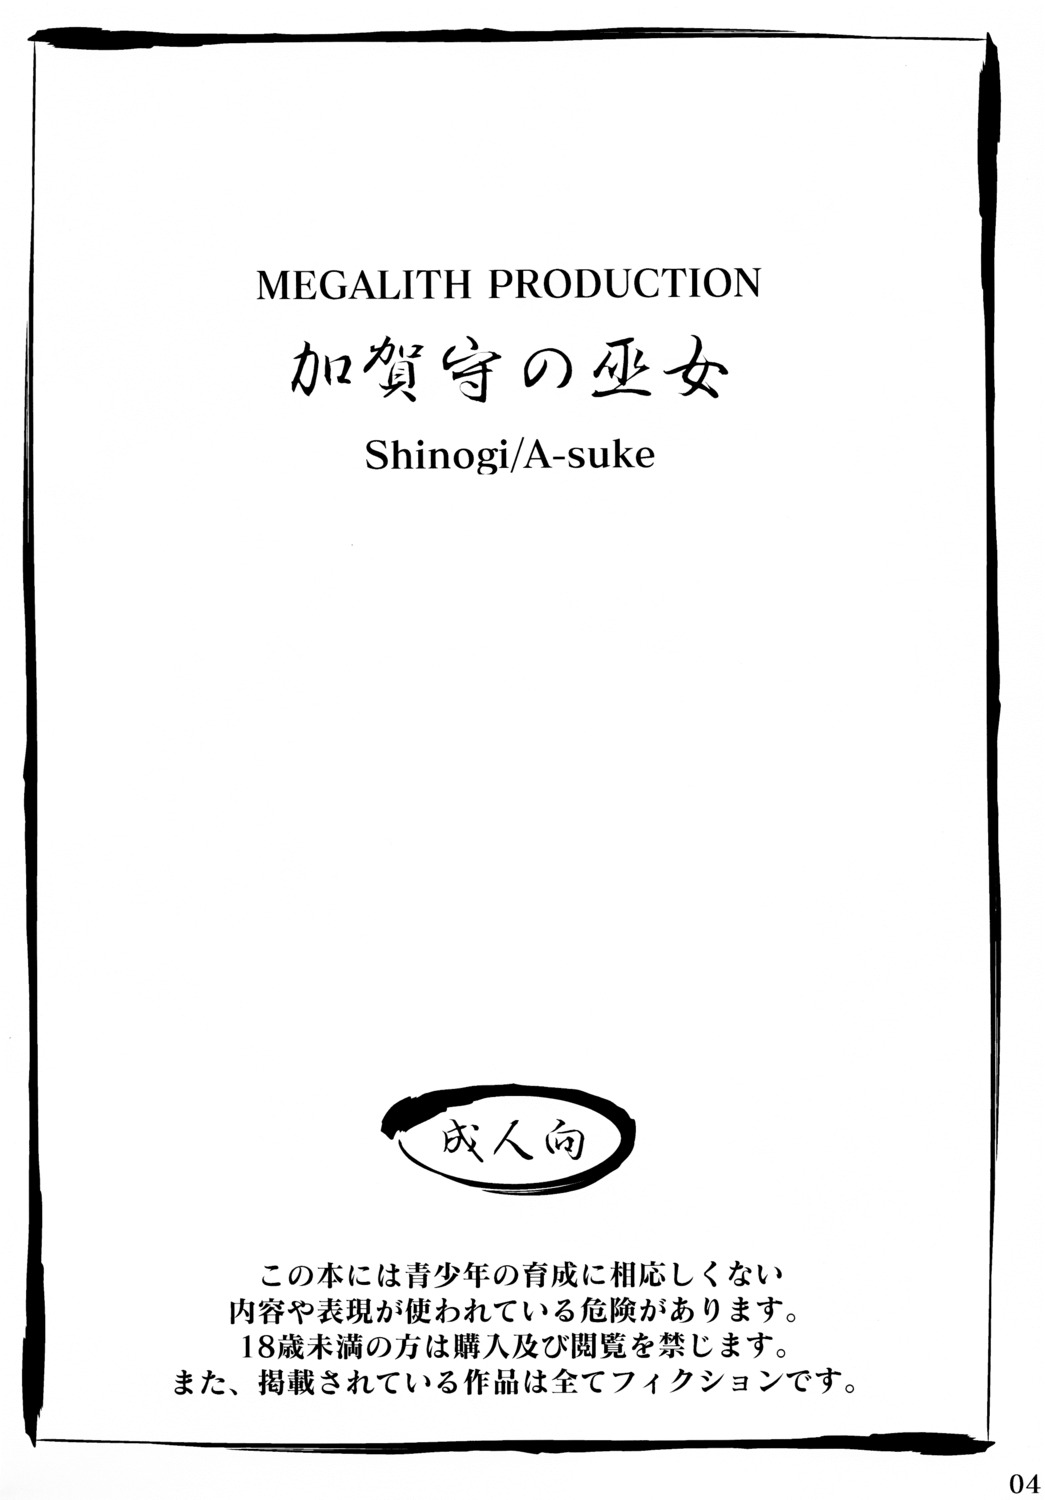 megalith_production monochrome shinogi_a-suke text